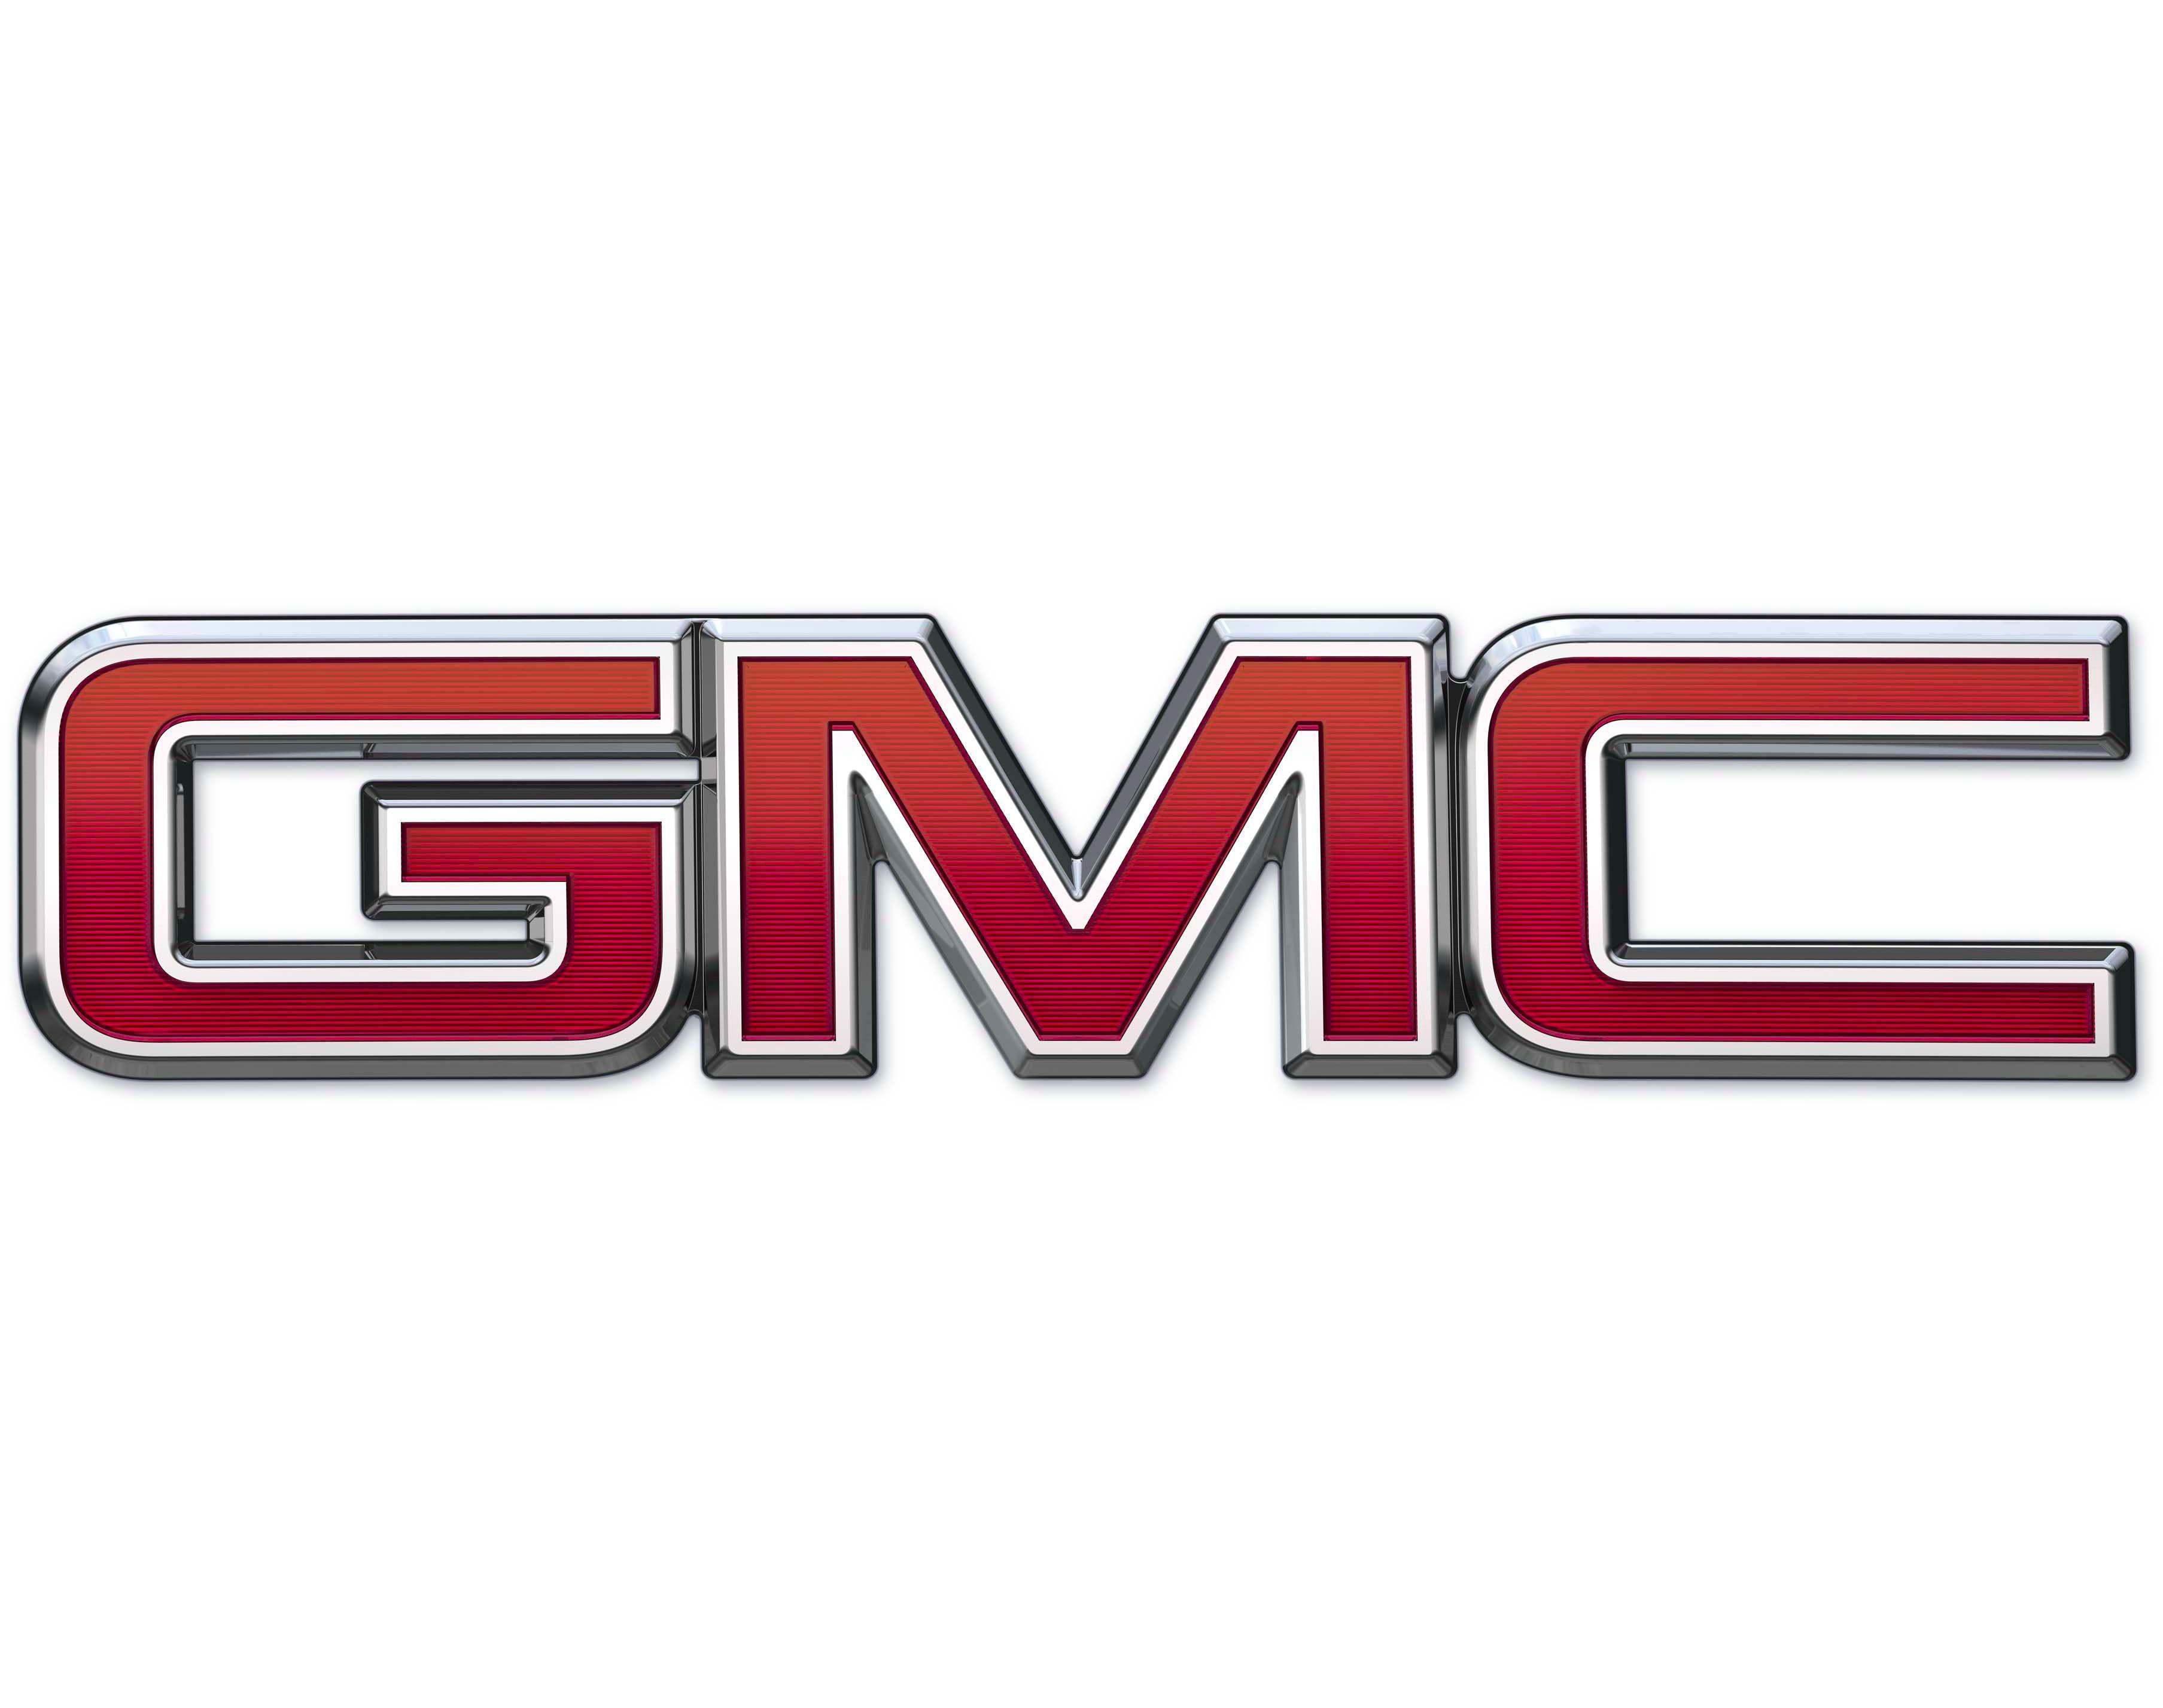 Old GMC Logo - GMC Logo, GMC Car Symbol Meaning and History | Car Brand Names.com